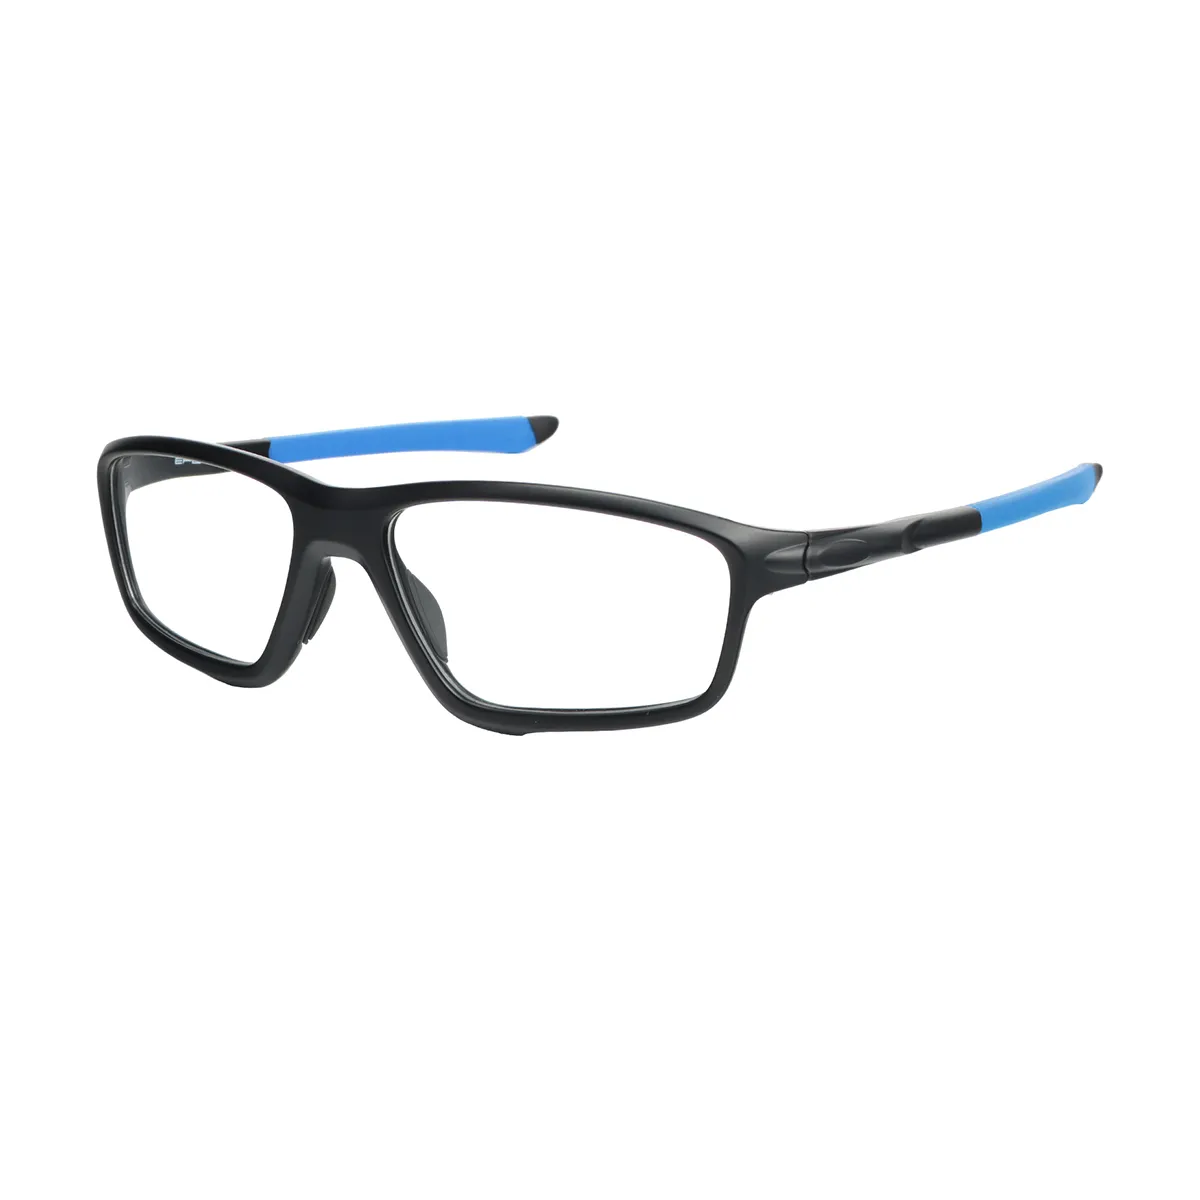 George - Rectangle Black-Blue Glasses for Men & Women - EFE